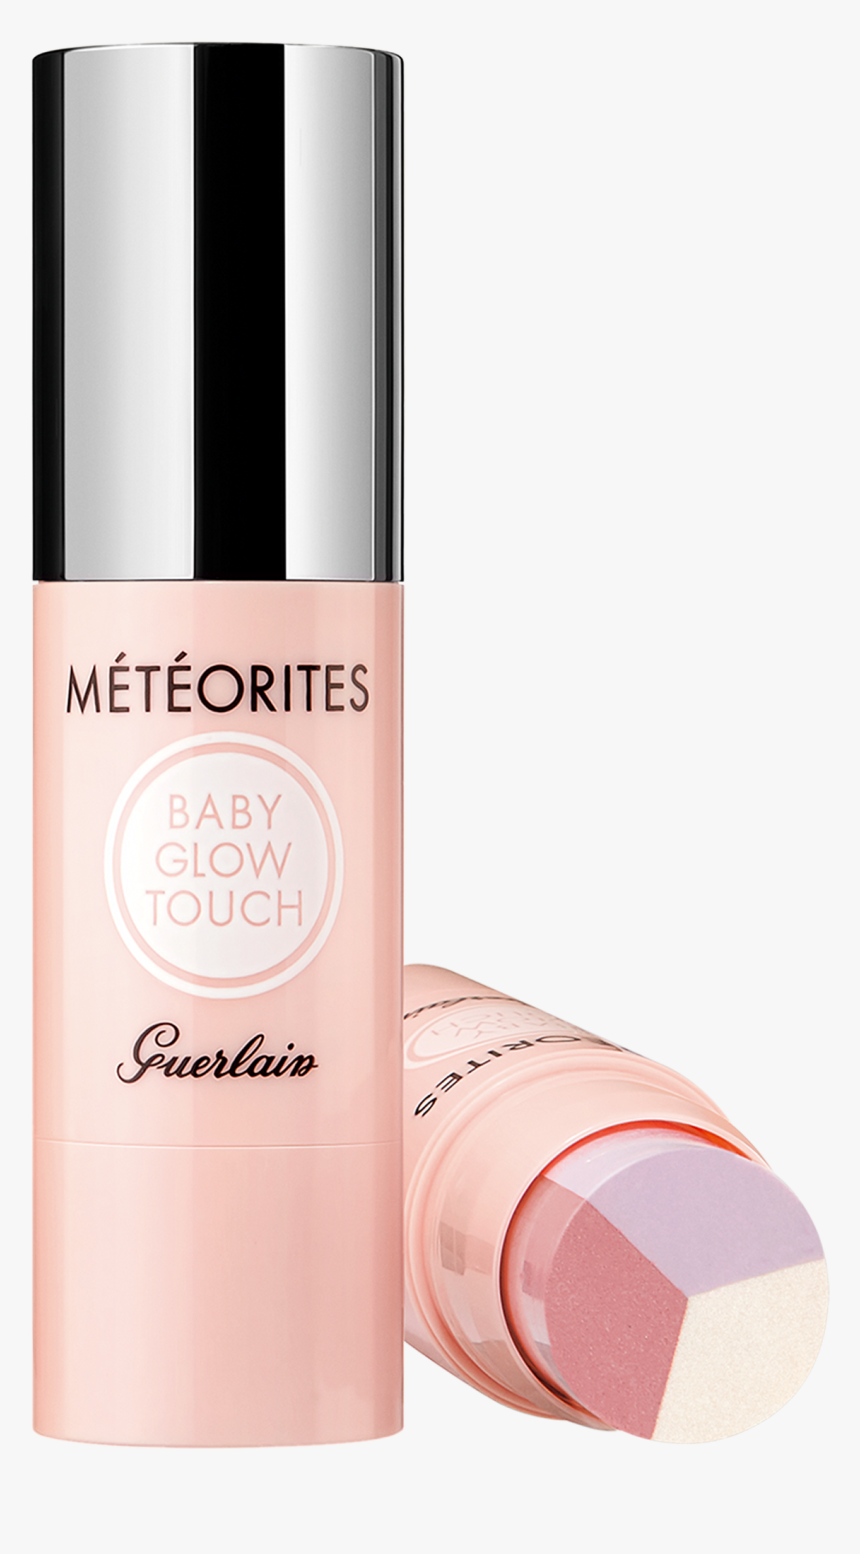 Météorites Baby Glow Touch - Baby Glow Touch Cc Guerlain Là Gì, HD Png Download, Free Download